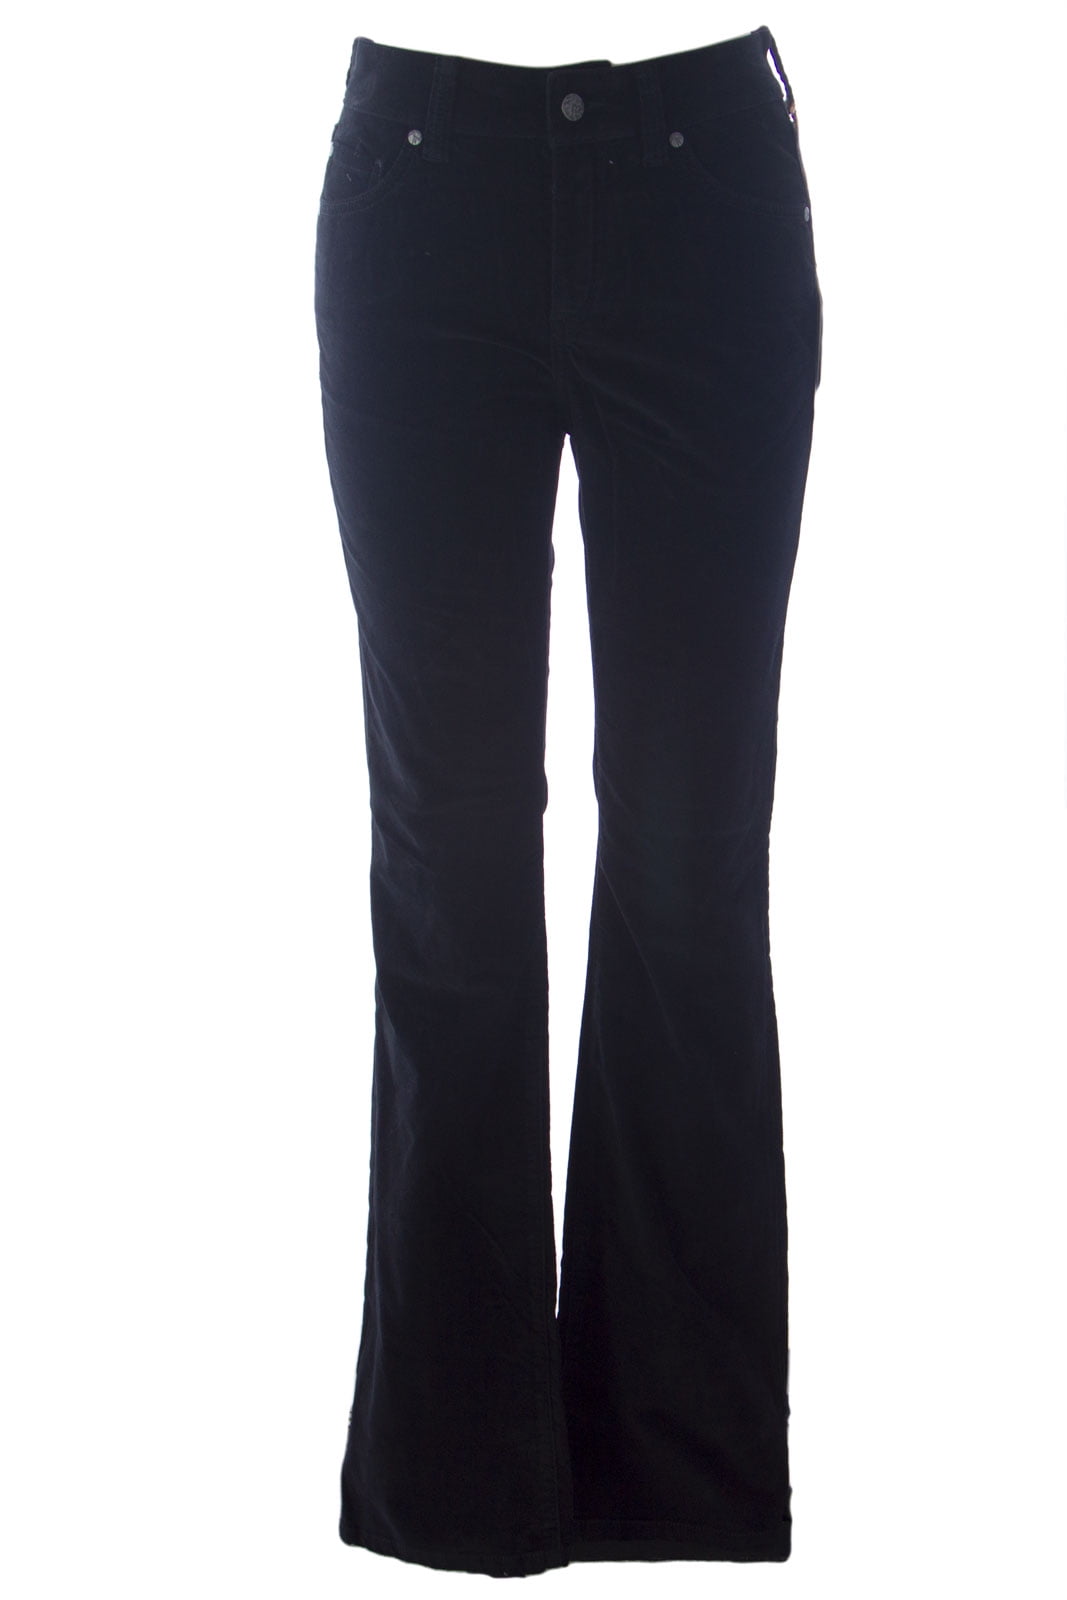 Boot Cut Black Pants Boot-cut Ultimate Black Trousers | Oplev 20